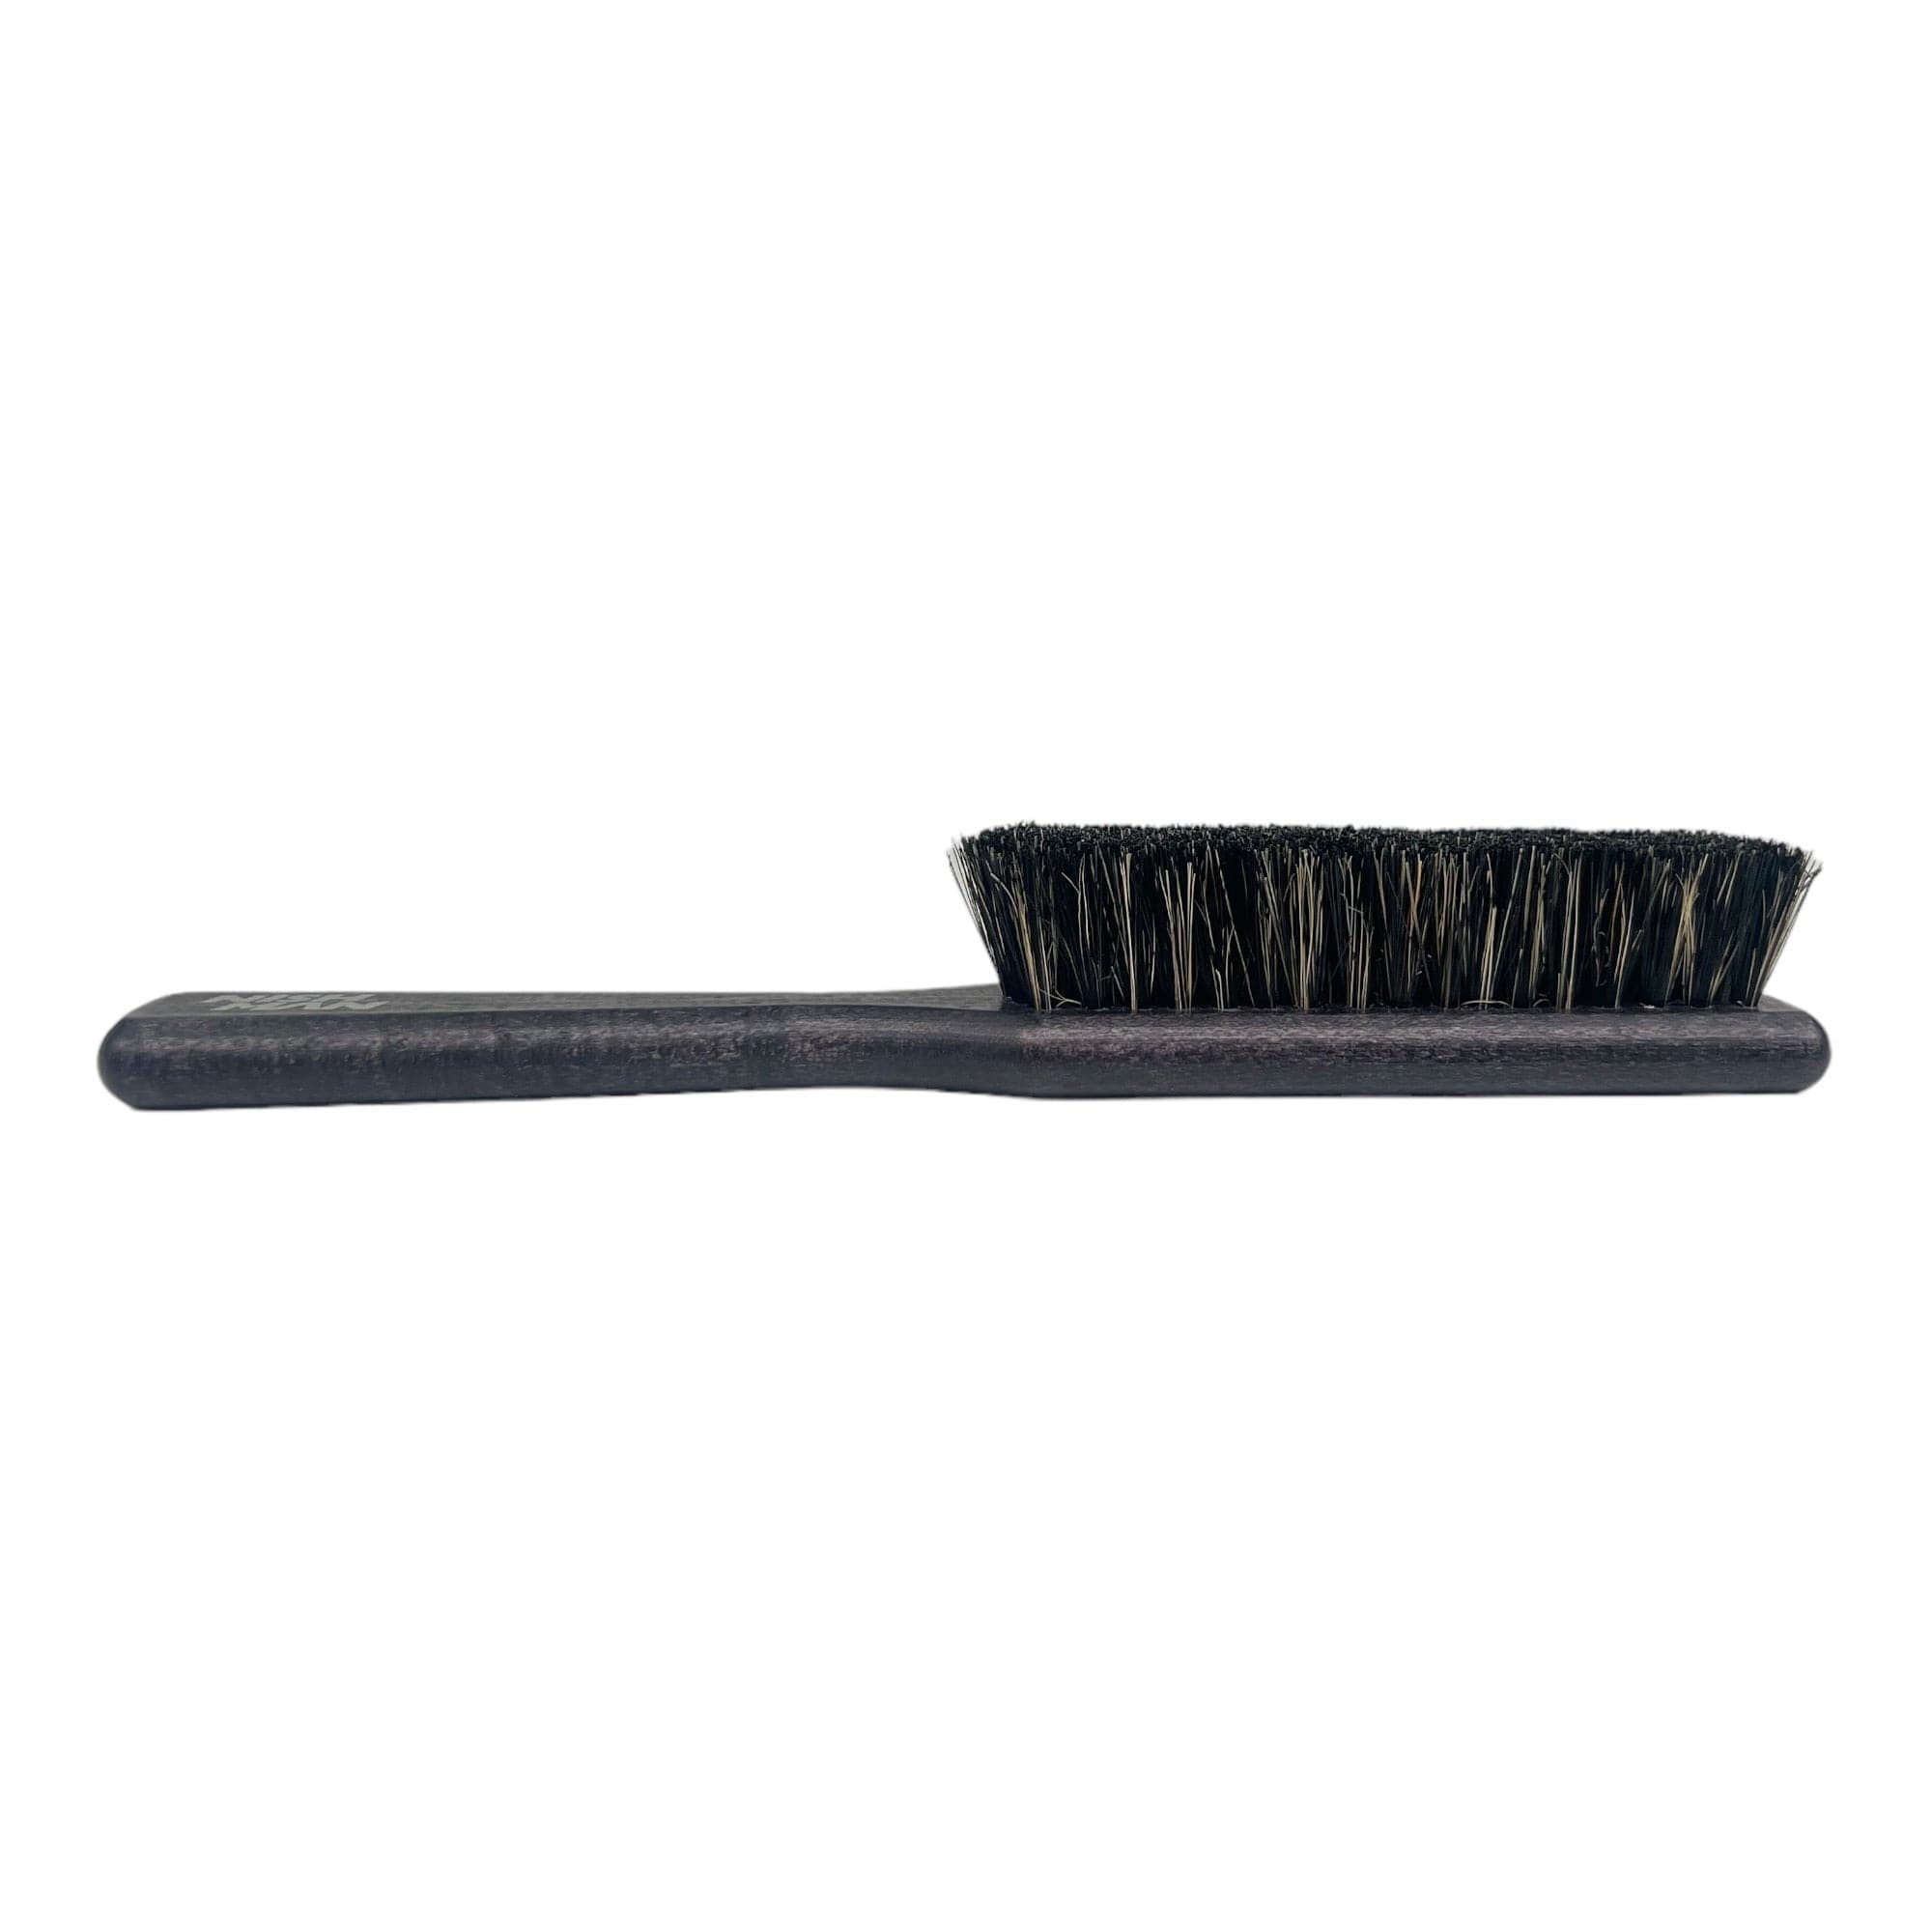 Nishman - Fade Haircut Brush 21cm